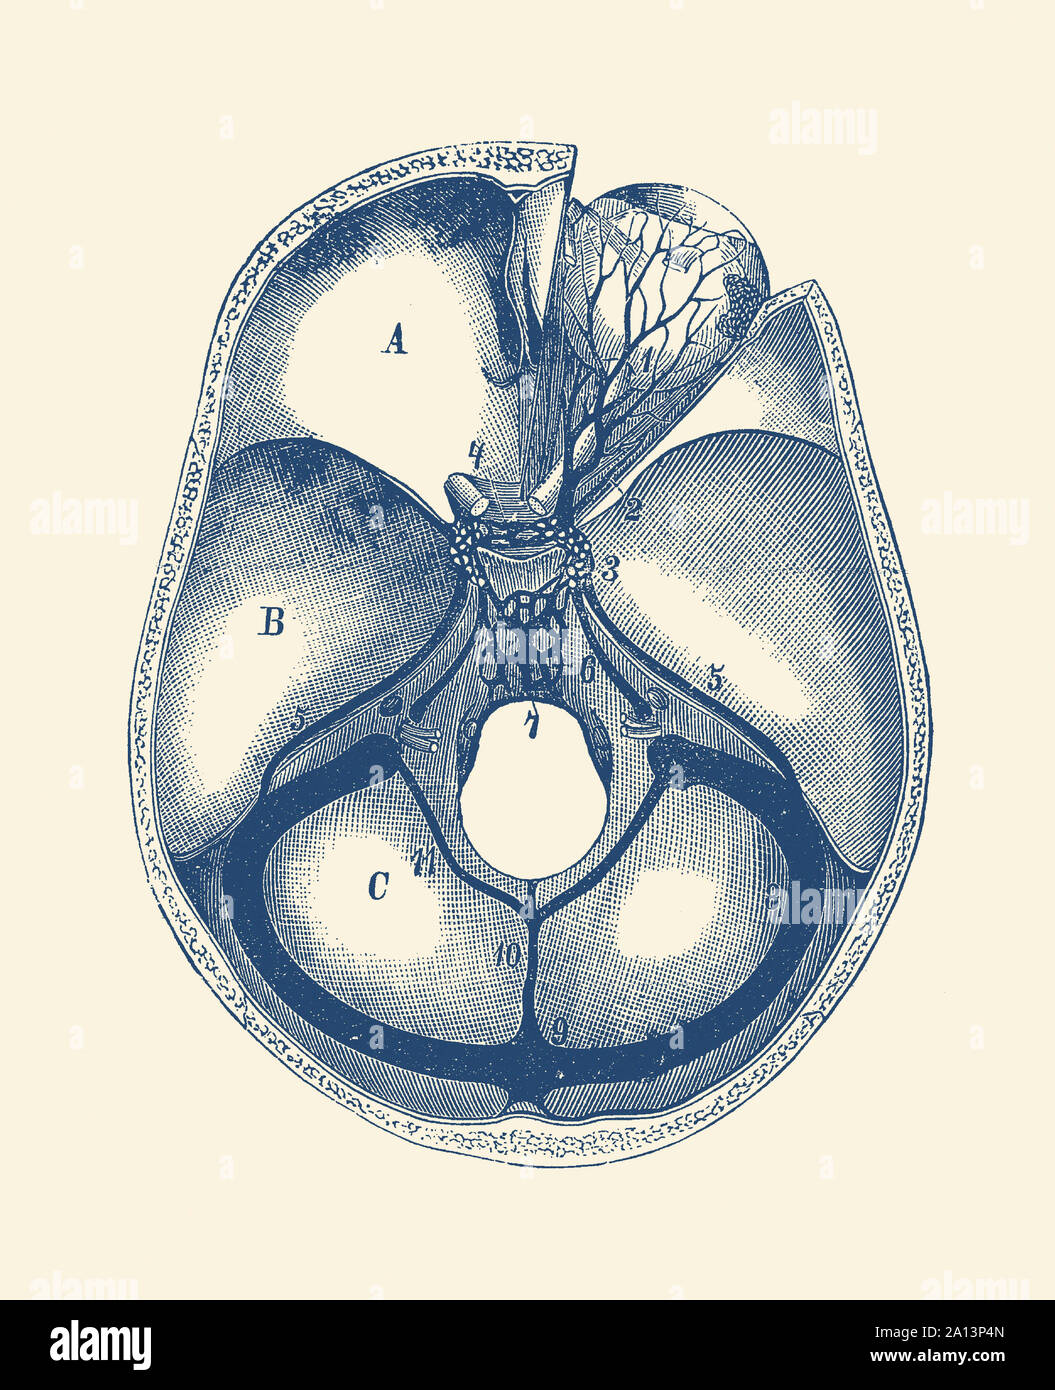 Anatomia Vintage Print mostra una vista superiore del cervello umano, separando i diversi lobi. Foto Stock